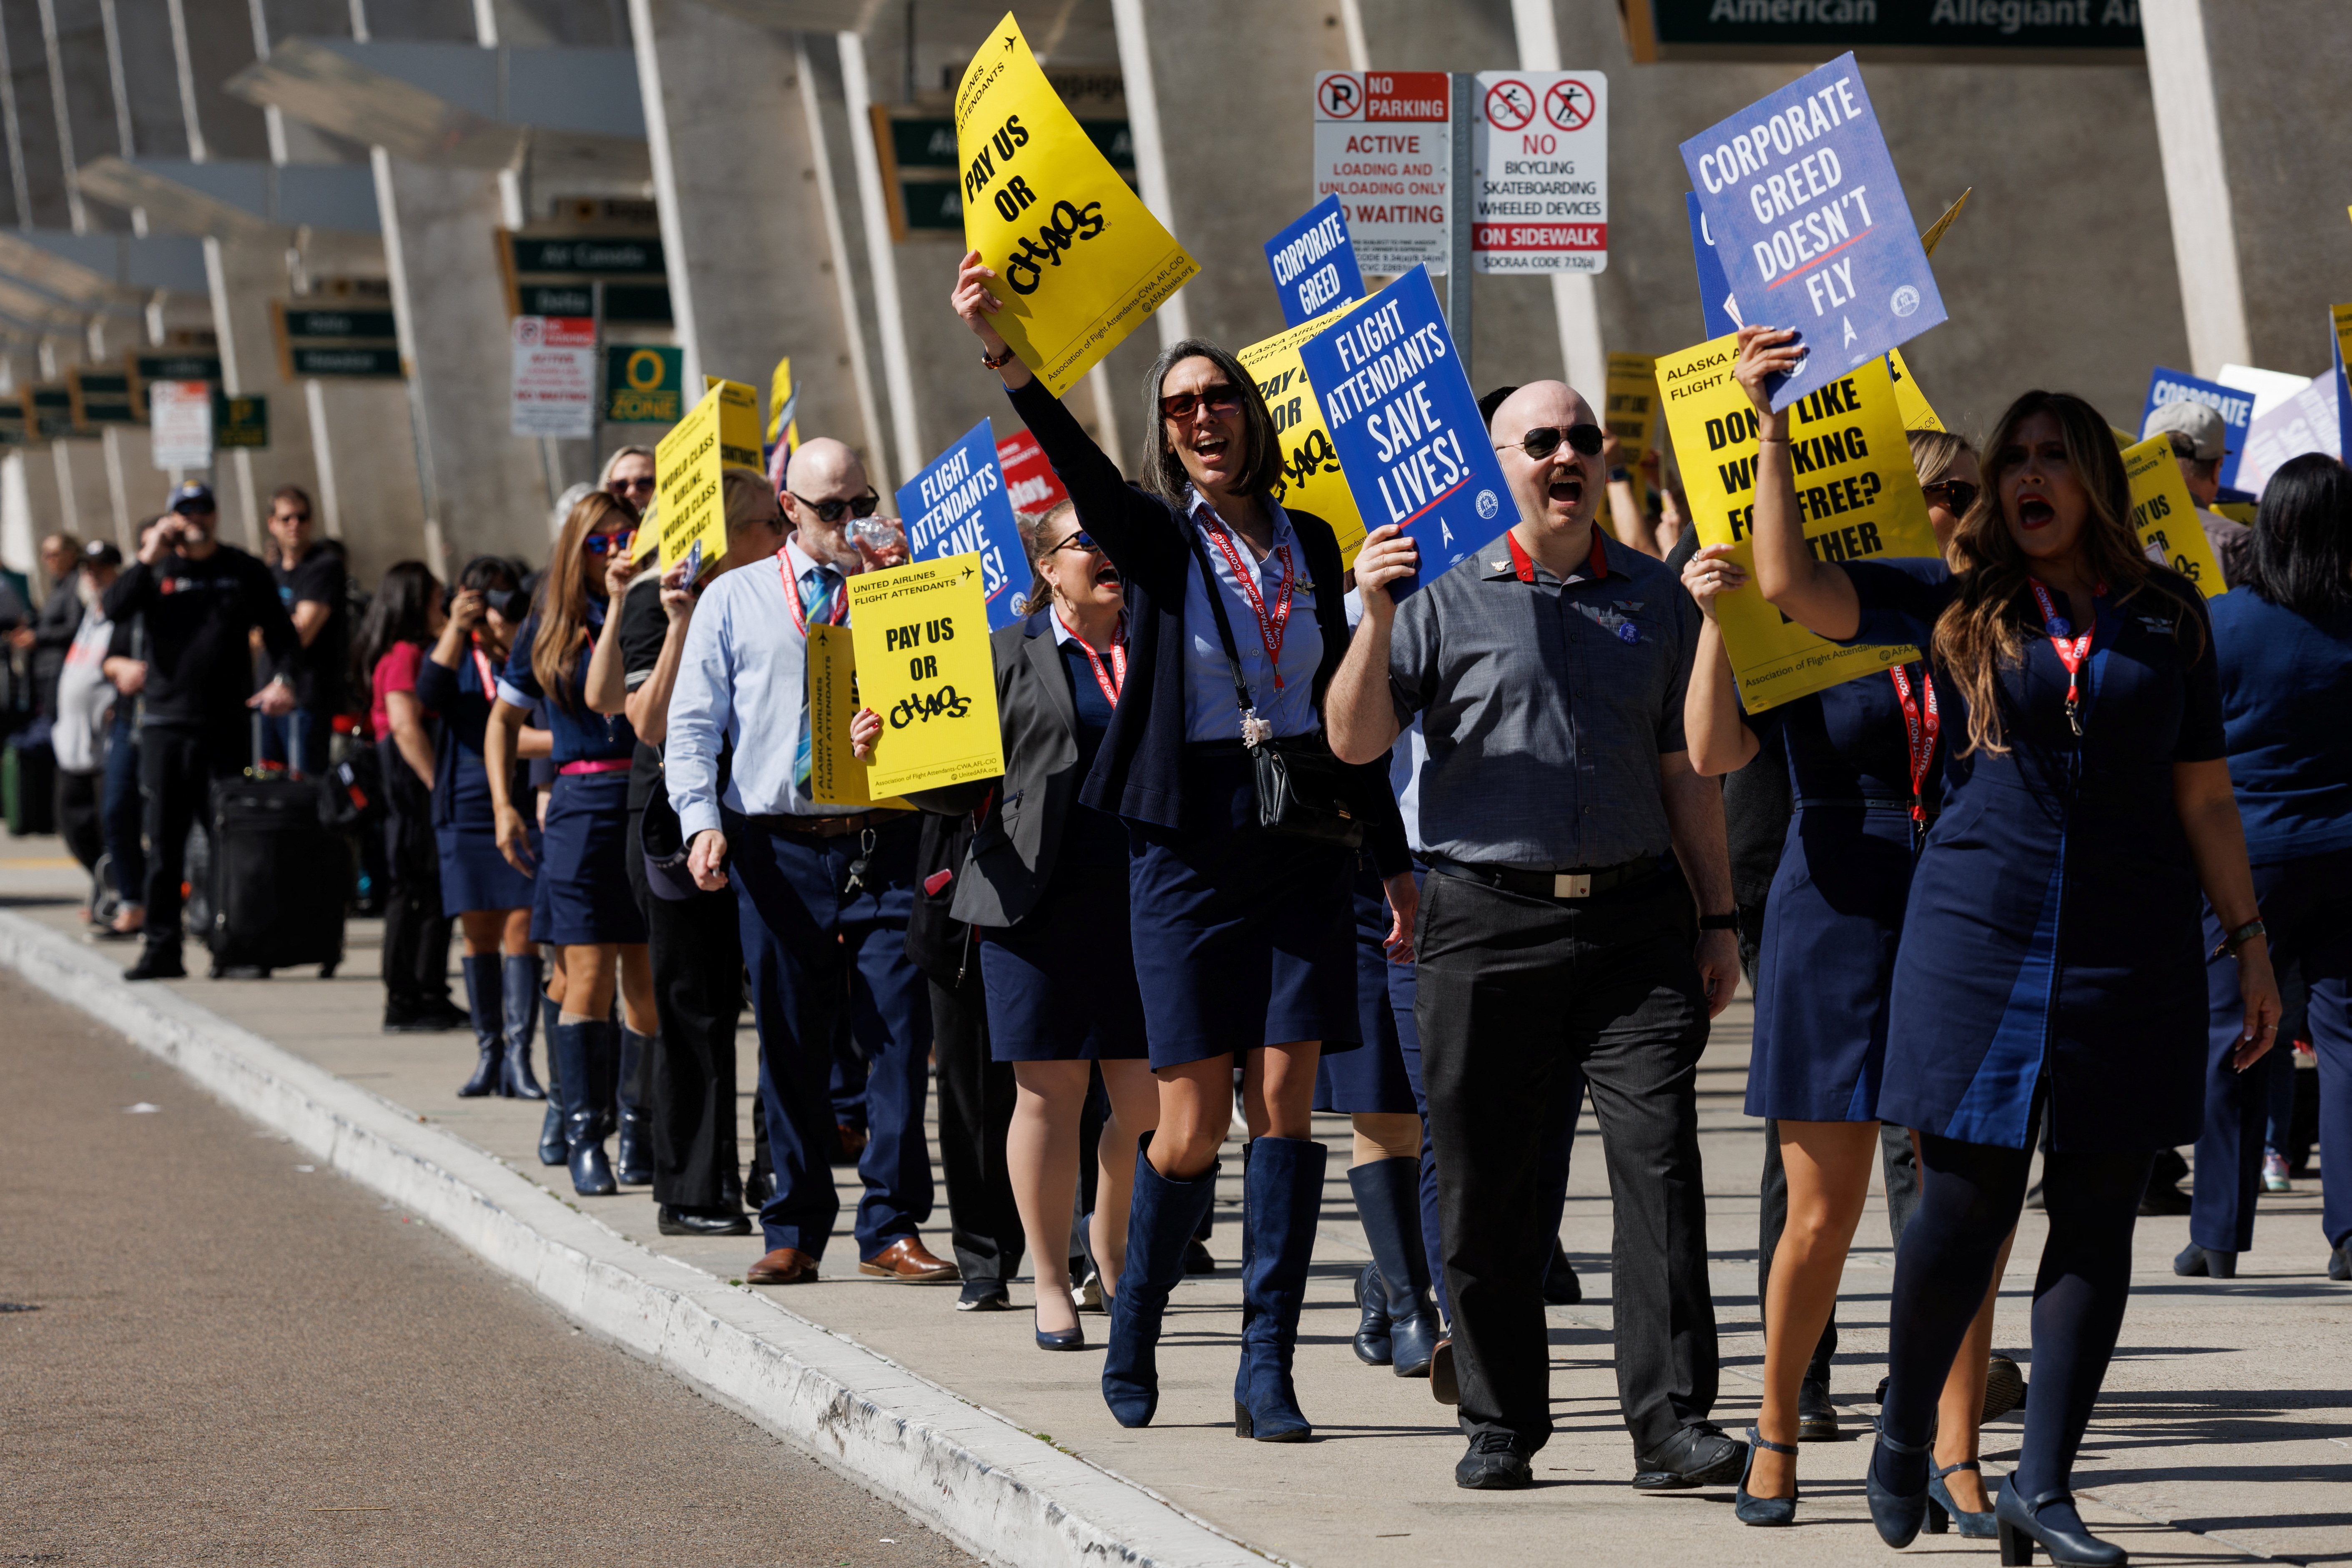 Flight attendants picket airports across America